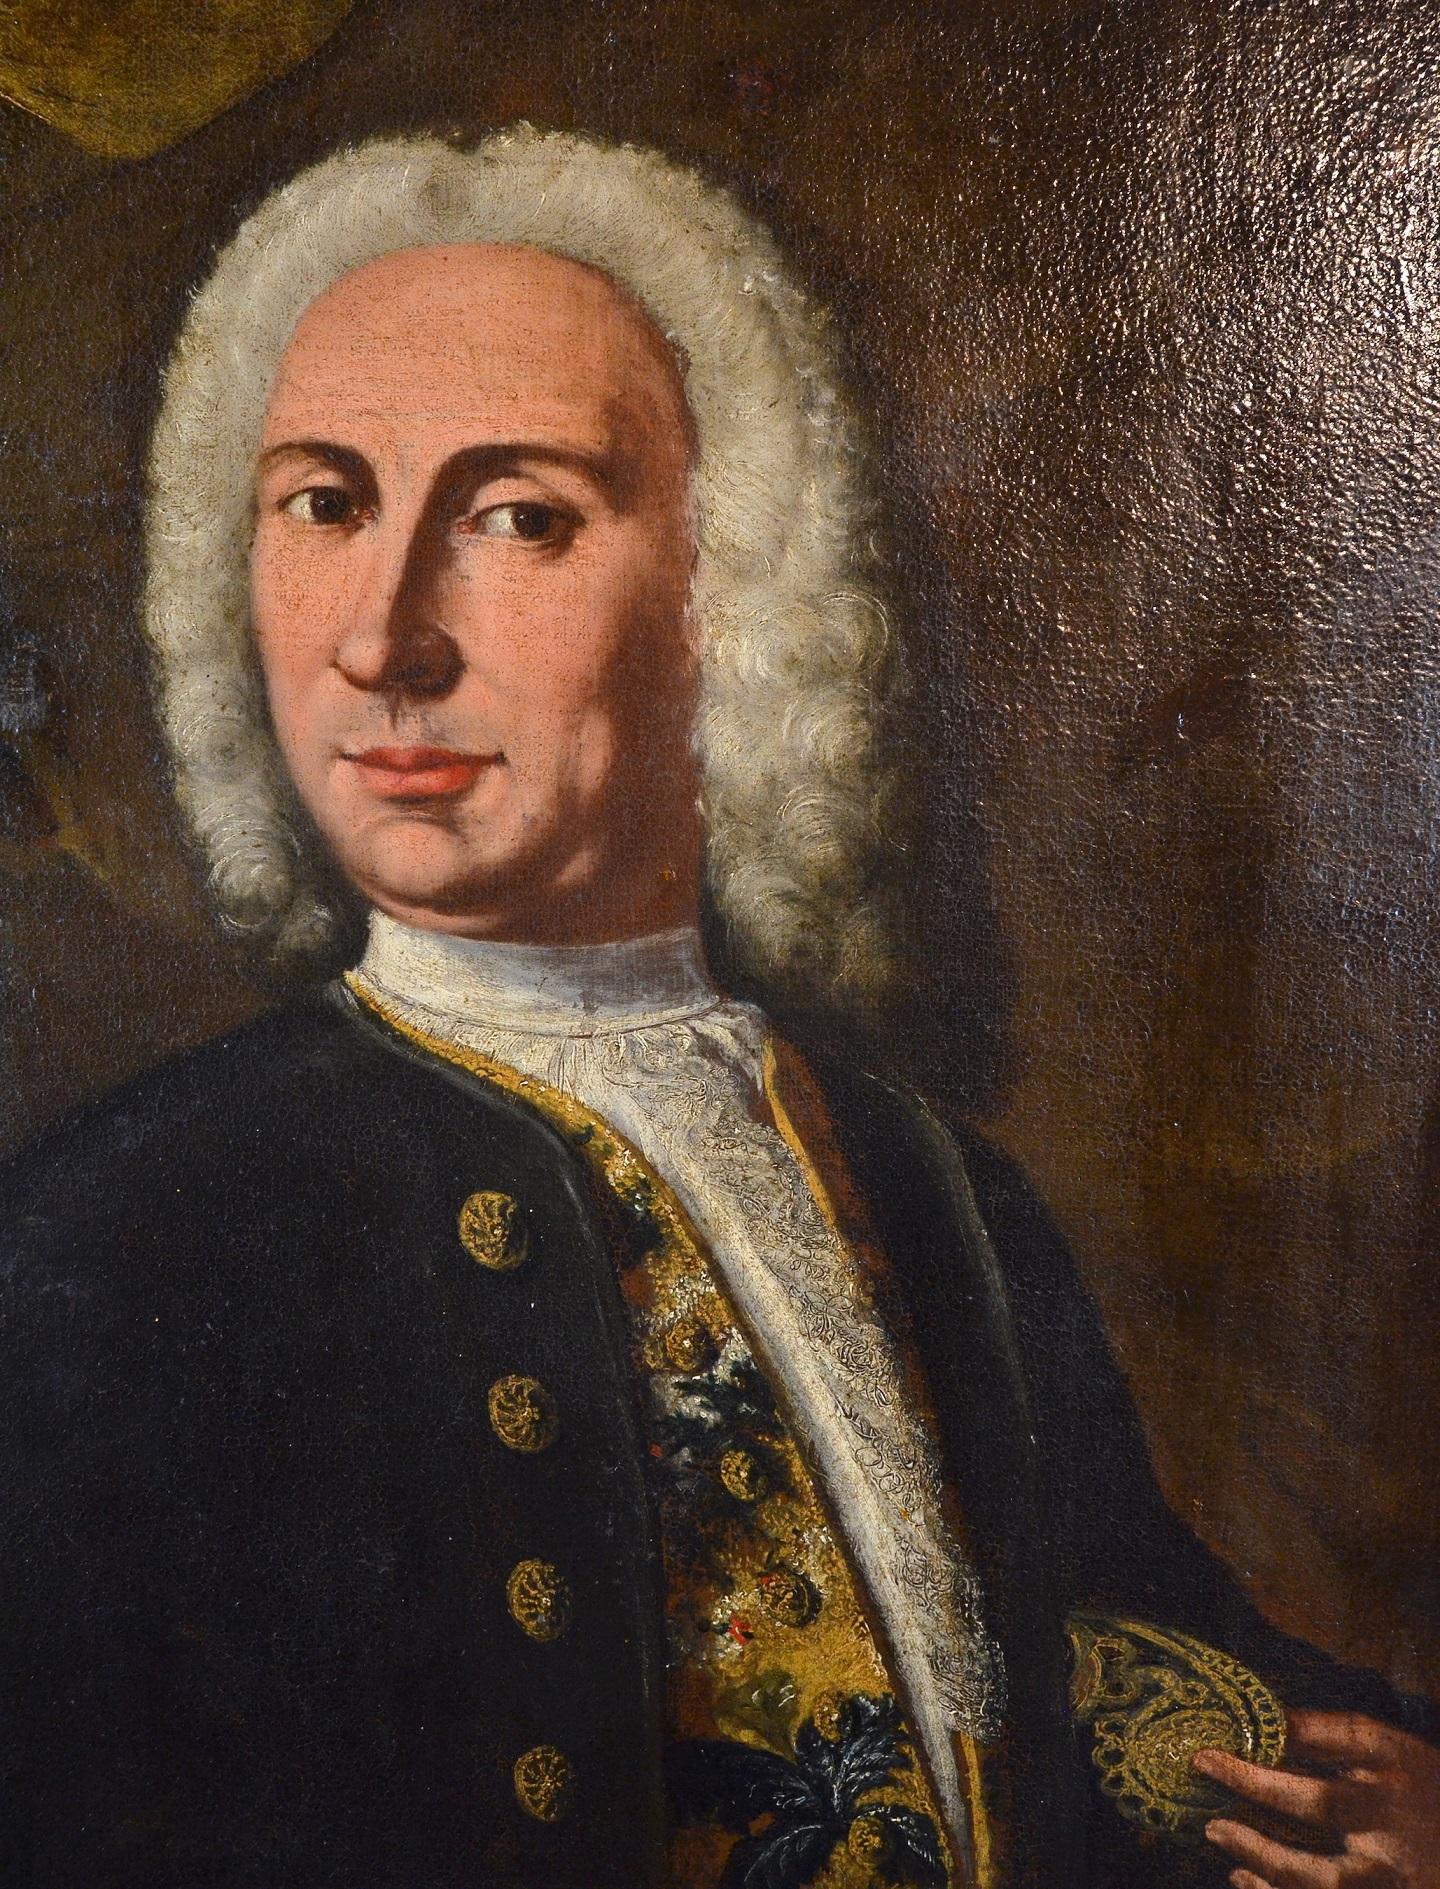 Venetian Gentleman Portrait Paint Oil on canvas 18th Century Italy Baroque Art 2